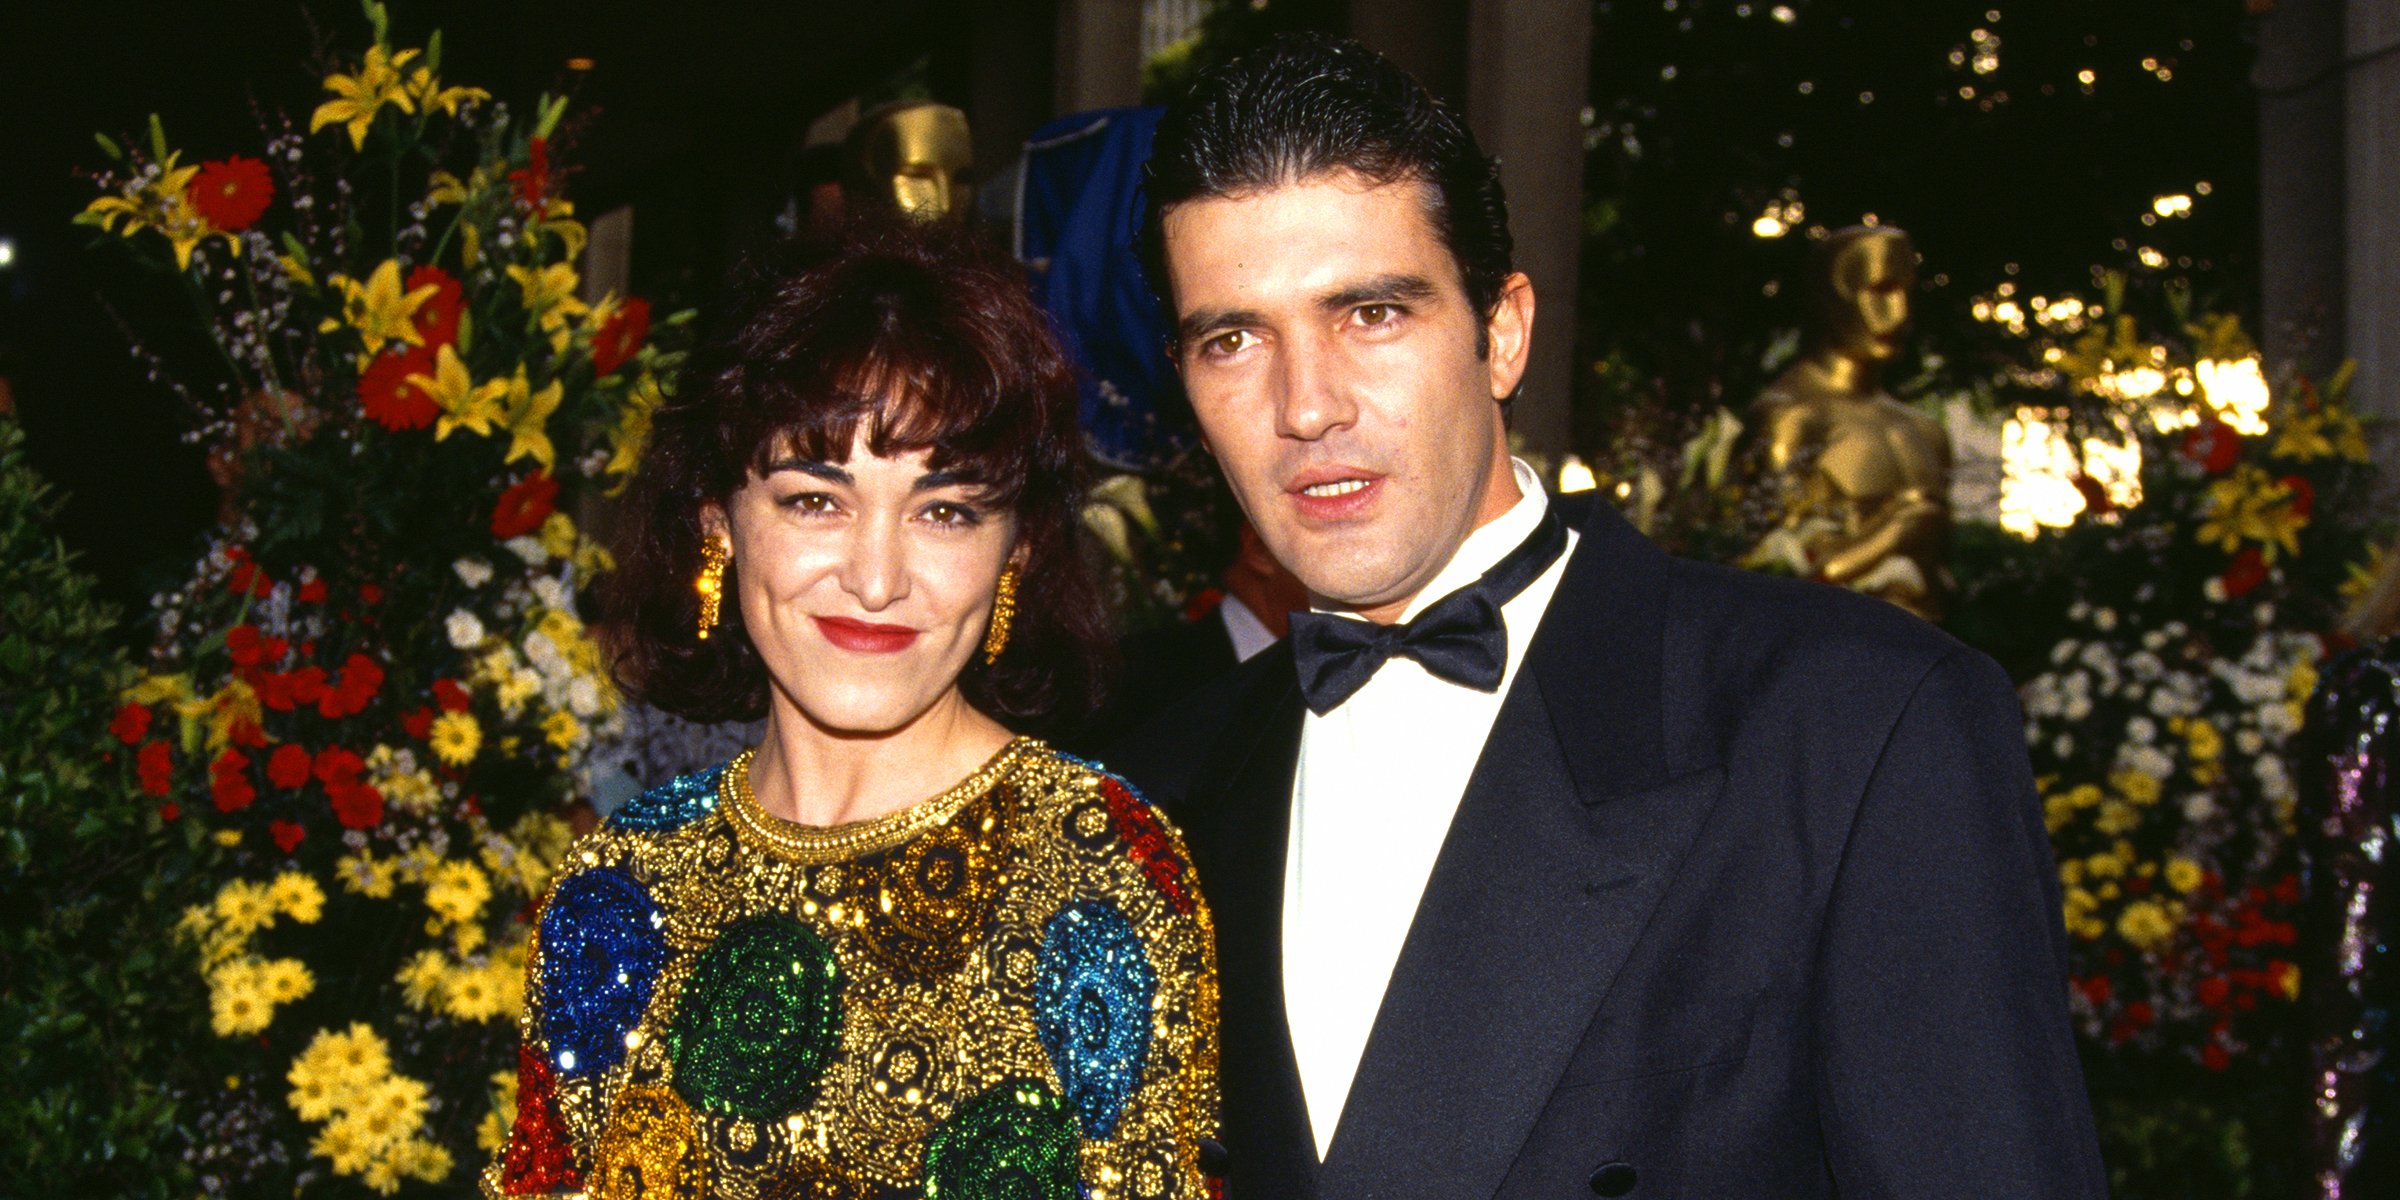 Ana Leza and Antonio Banderas | Source: Getty Images